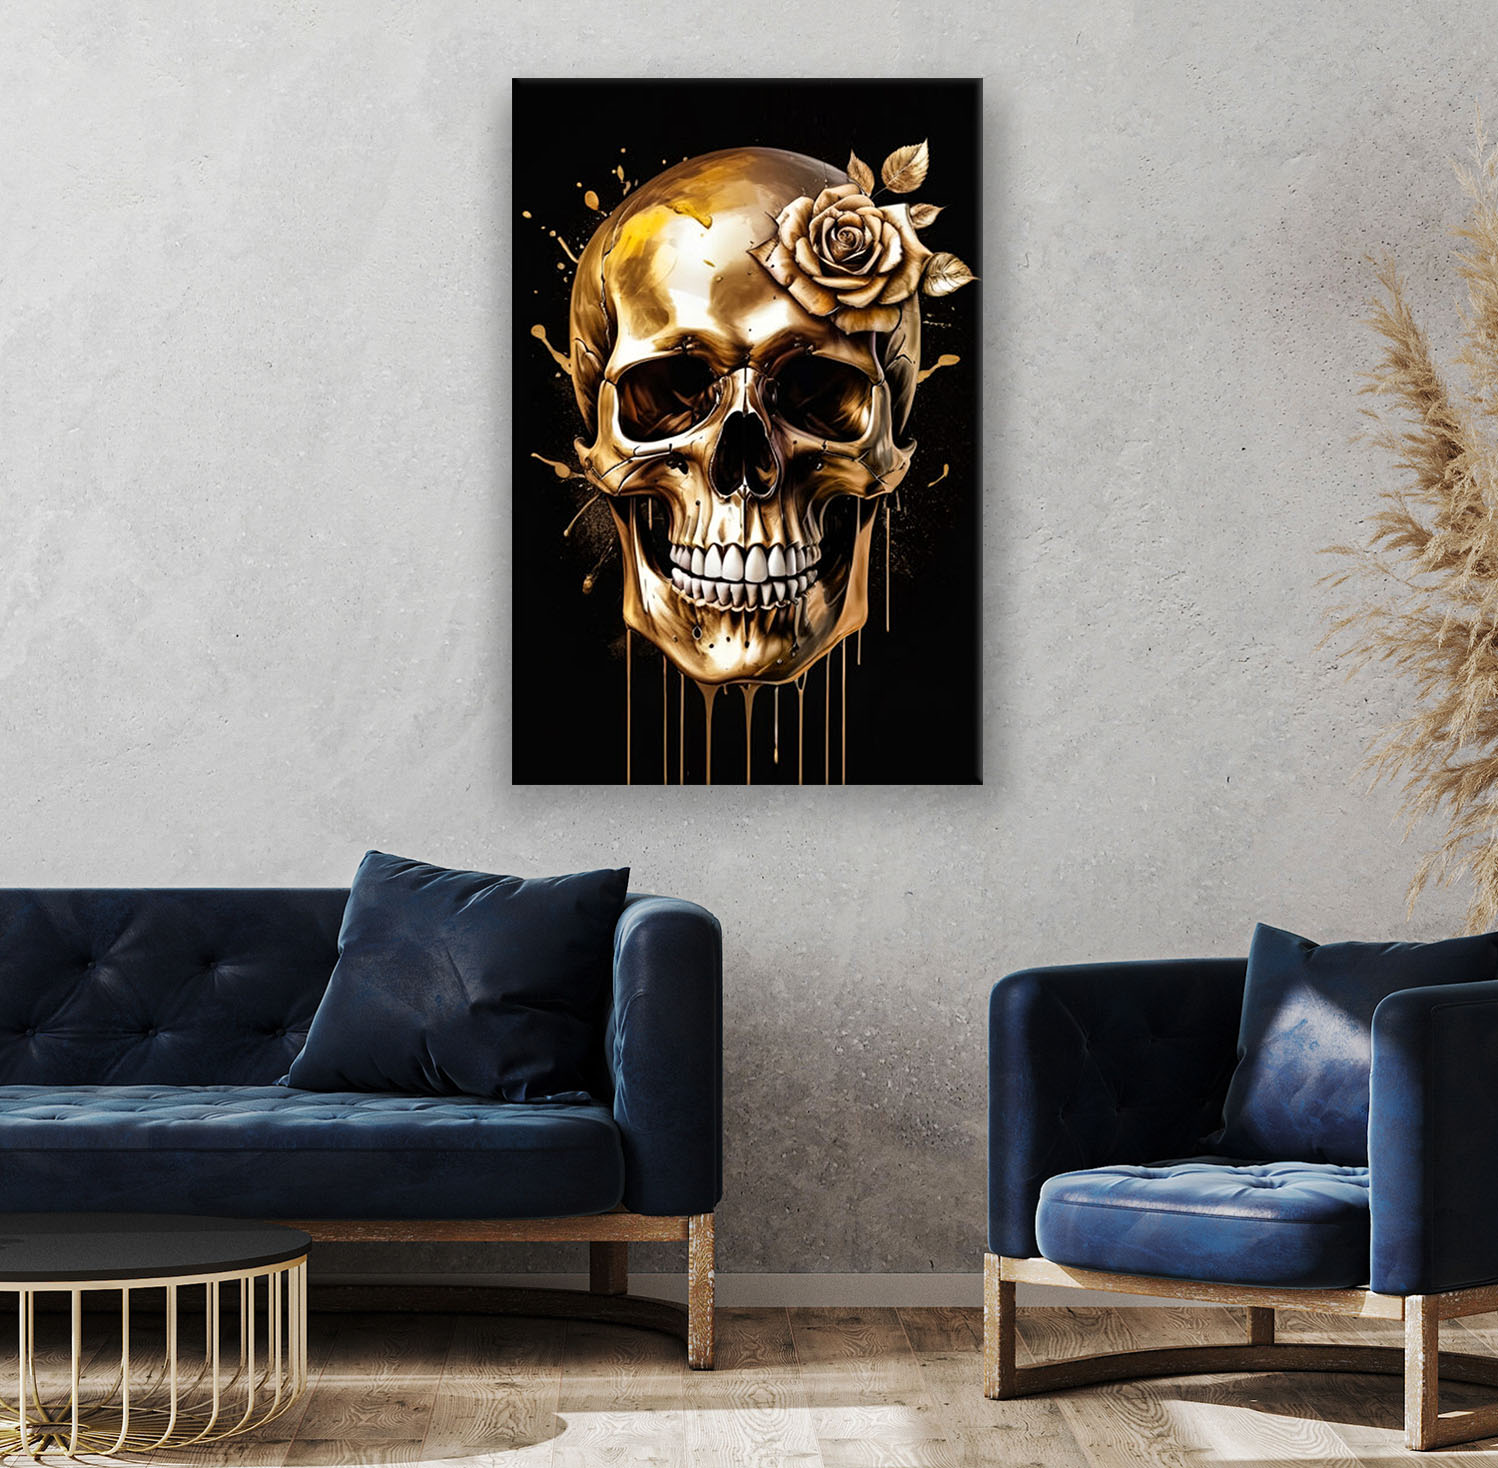 Totenkopf mit Gold, Kunst, die Luxus repräsentiert, abstrakte Kunst